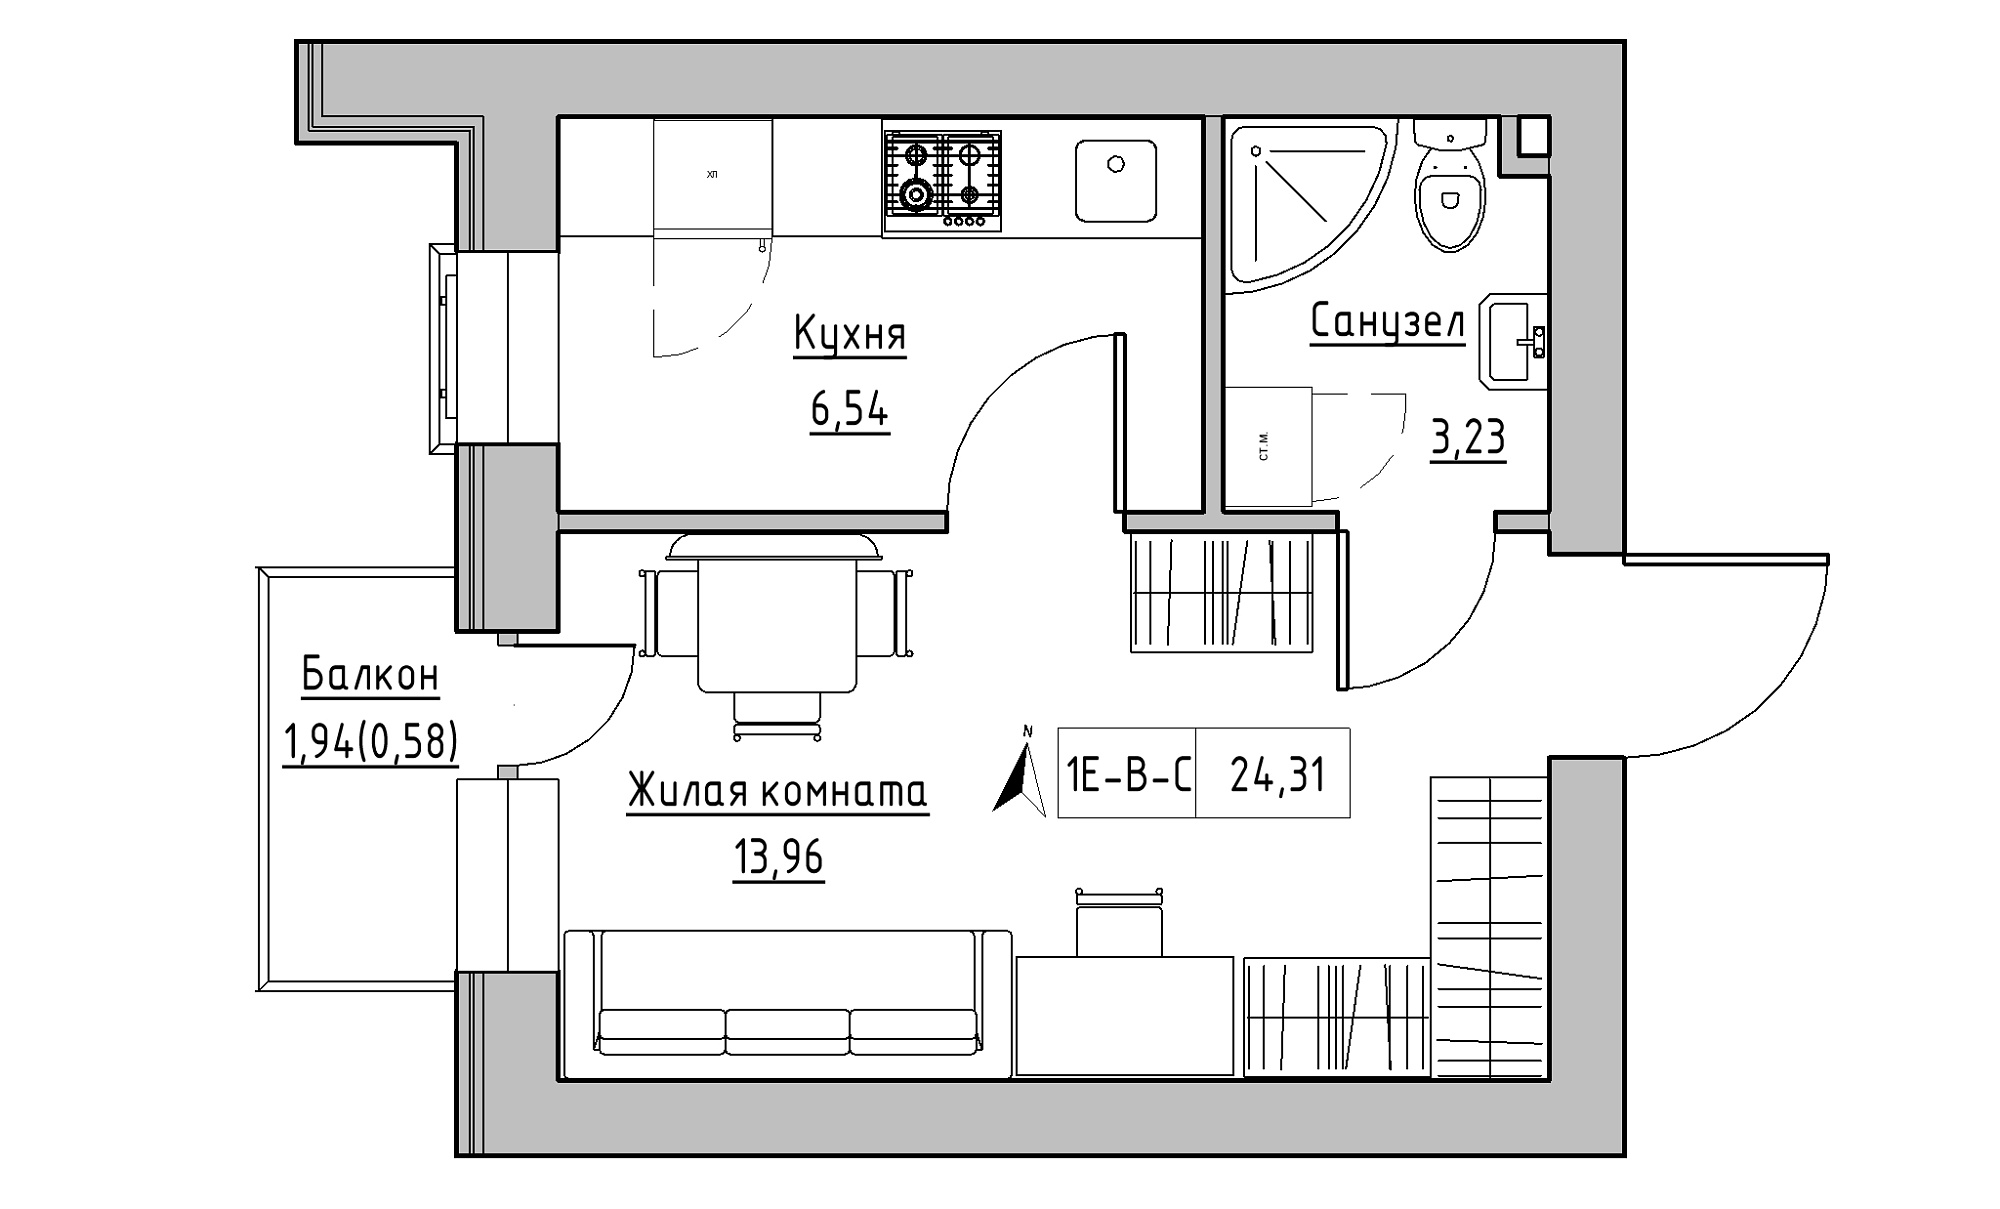 Planning 1-rm flats area 24.31m2, KS-016-03/0009.